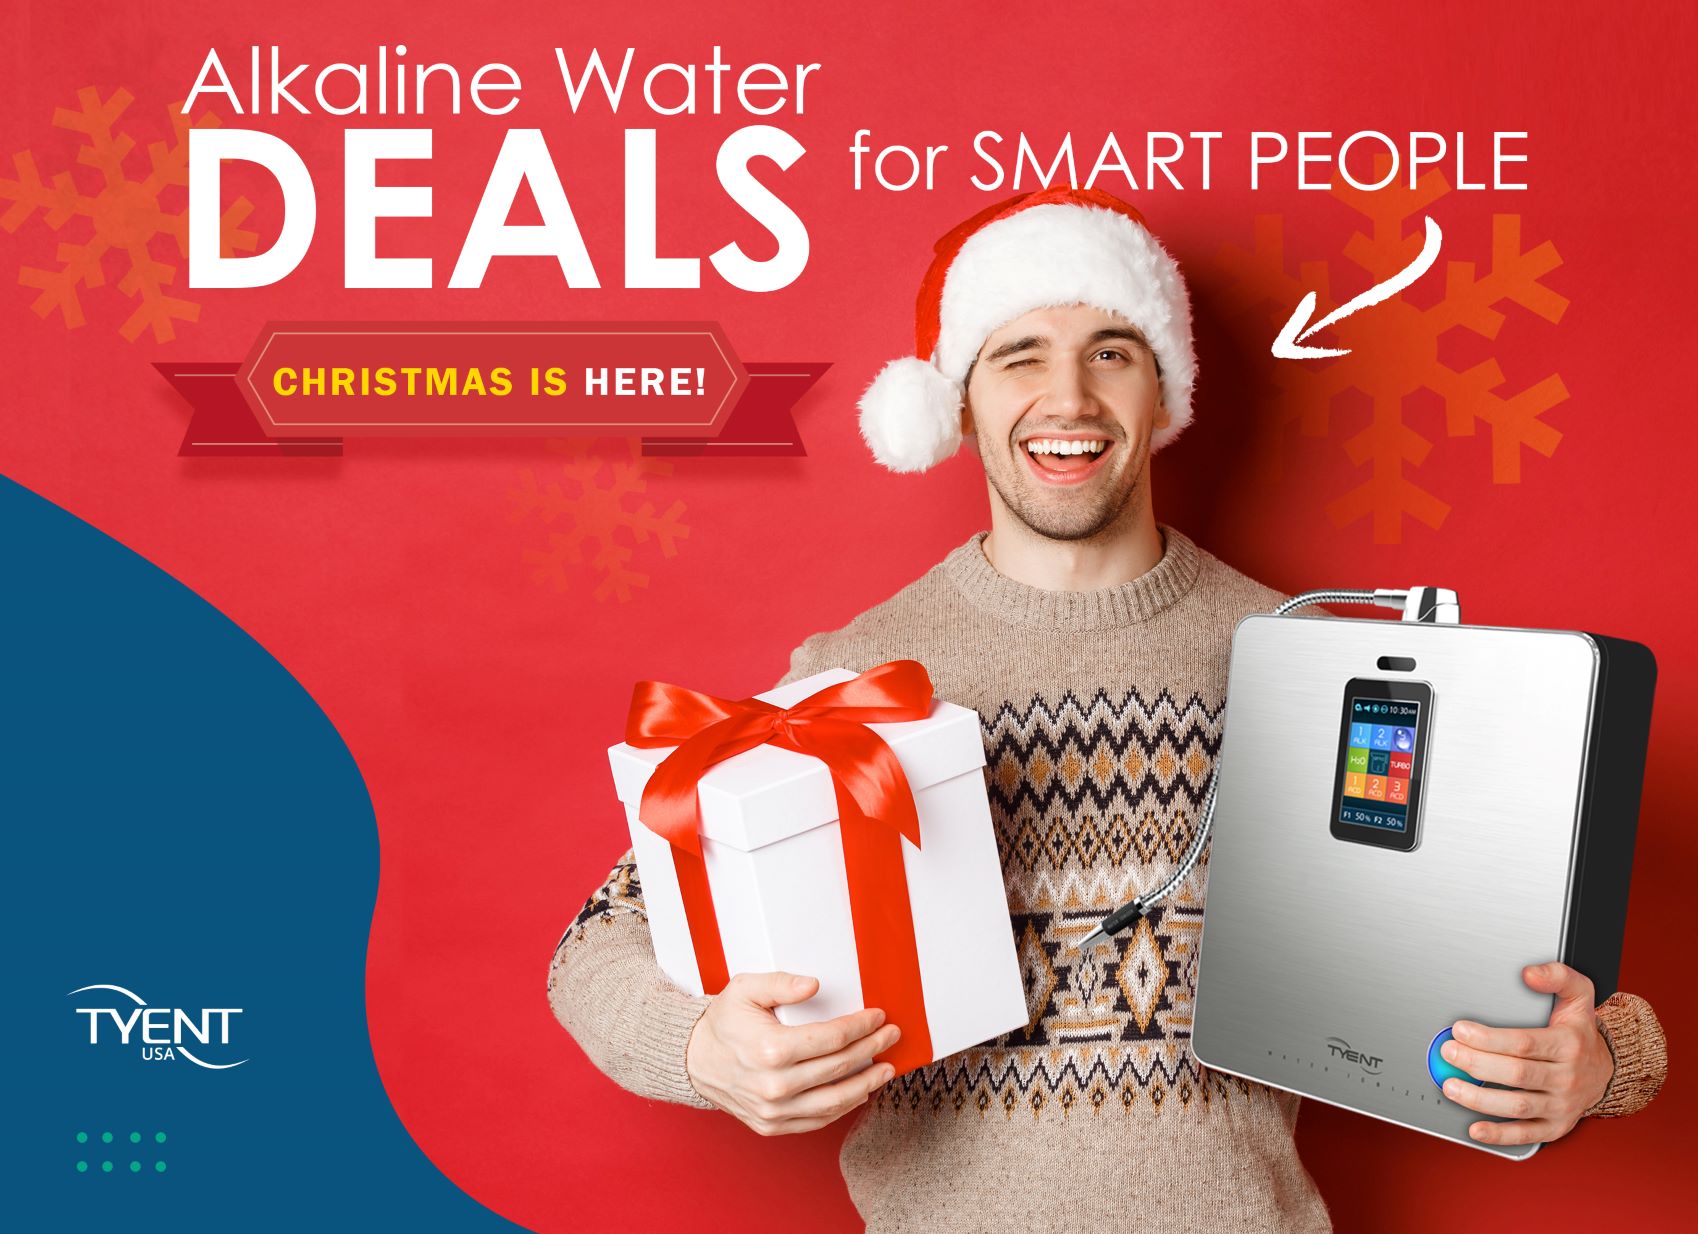 Alkaline Water Deals for Smart People. Christmas is HERE!